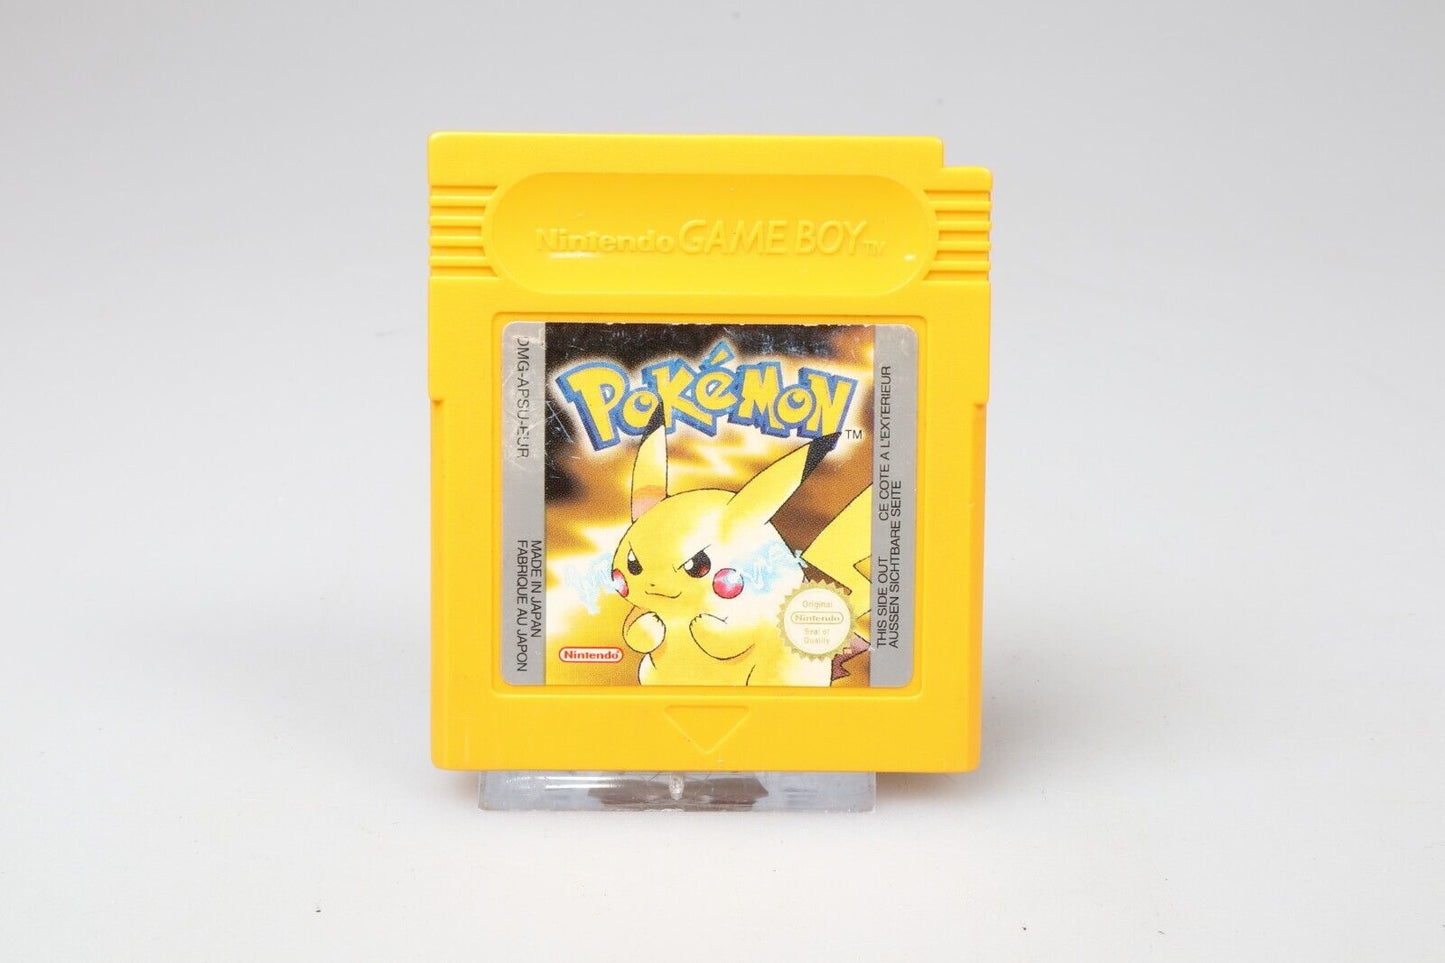 Gameboy | Pokemon Yellow Version EU - Gameboy | Tested